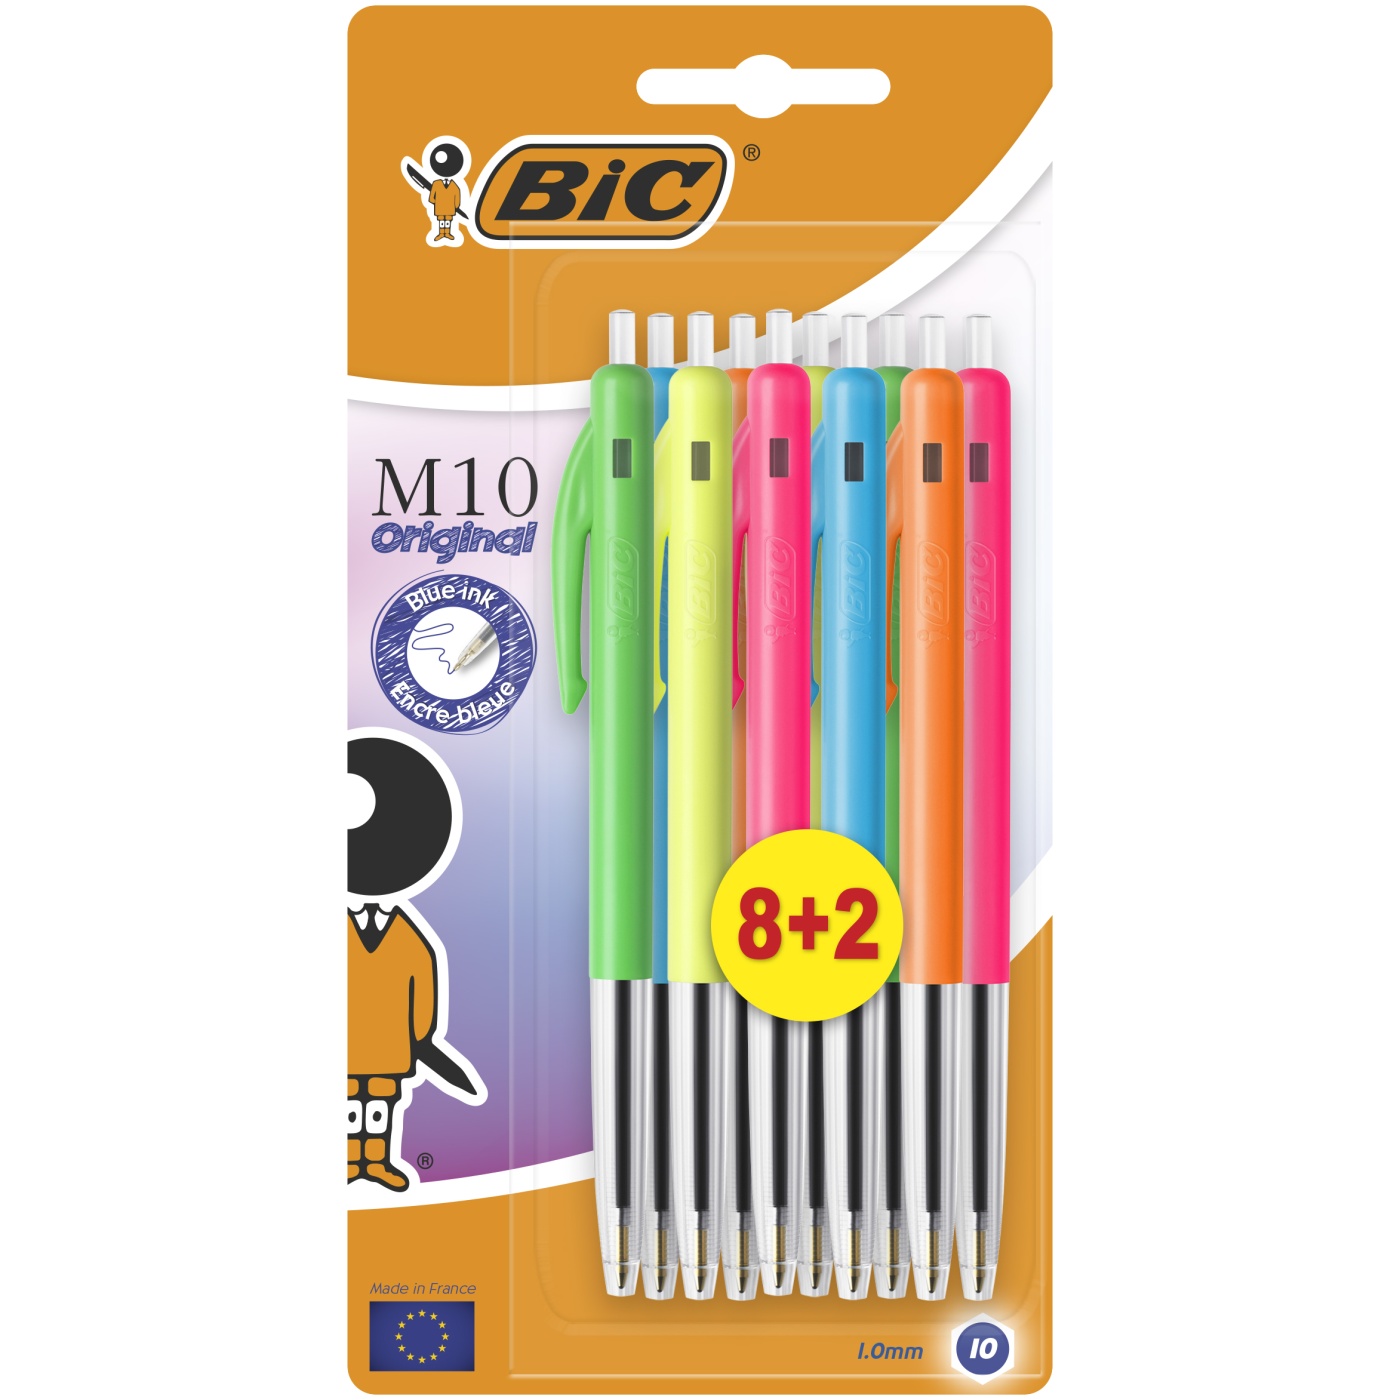 M10 Original Ballpoint Pen 10-set in the group Pens / Writing / Ballpoints at Pen Store (100235)